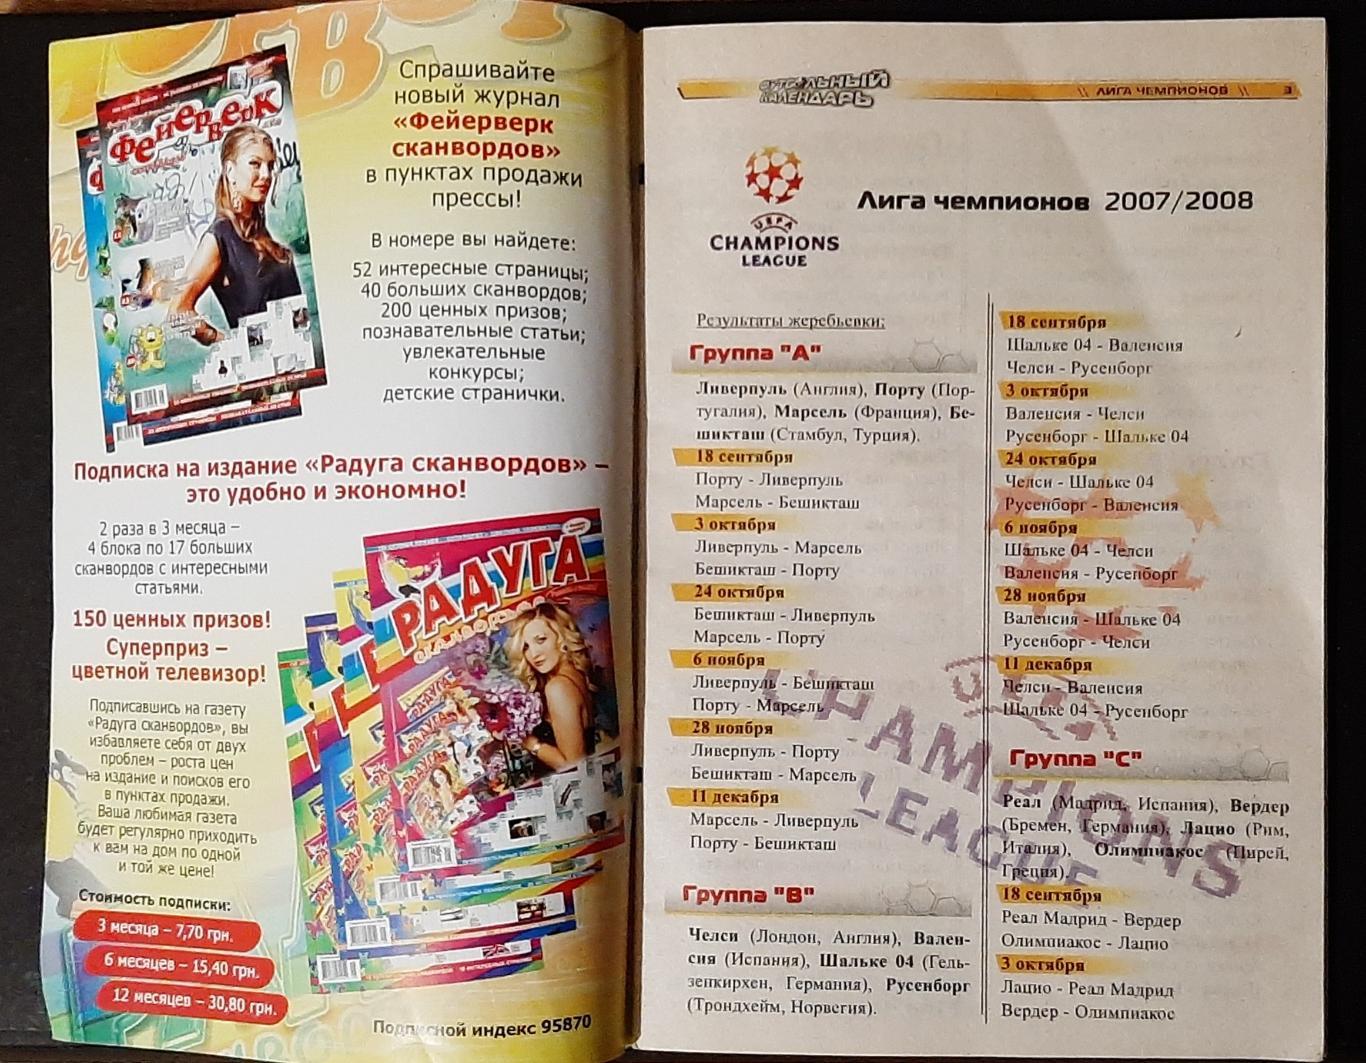 Футбольний календар 2007/08 5